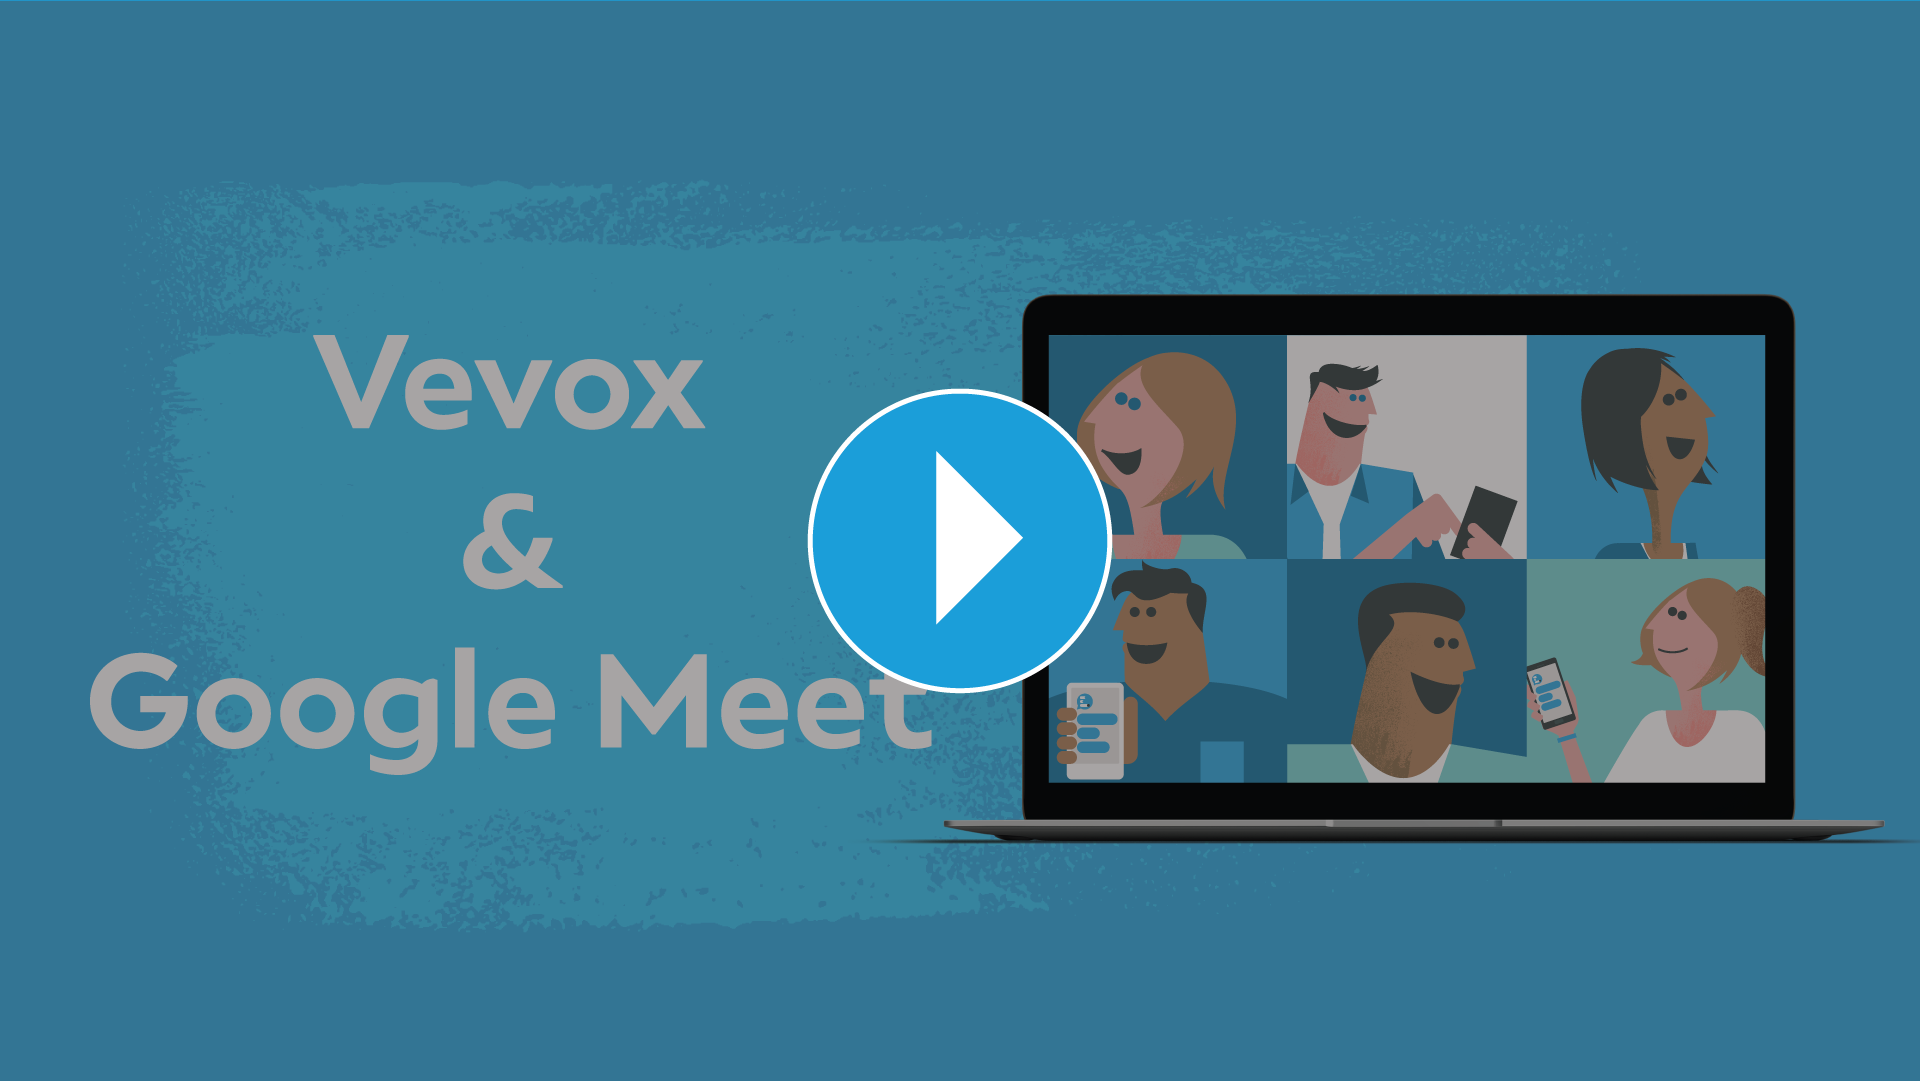 Vevox___Google_Meet.png